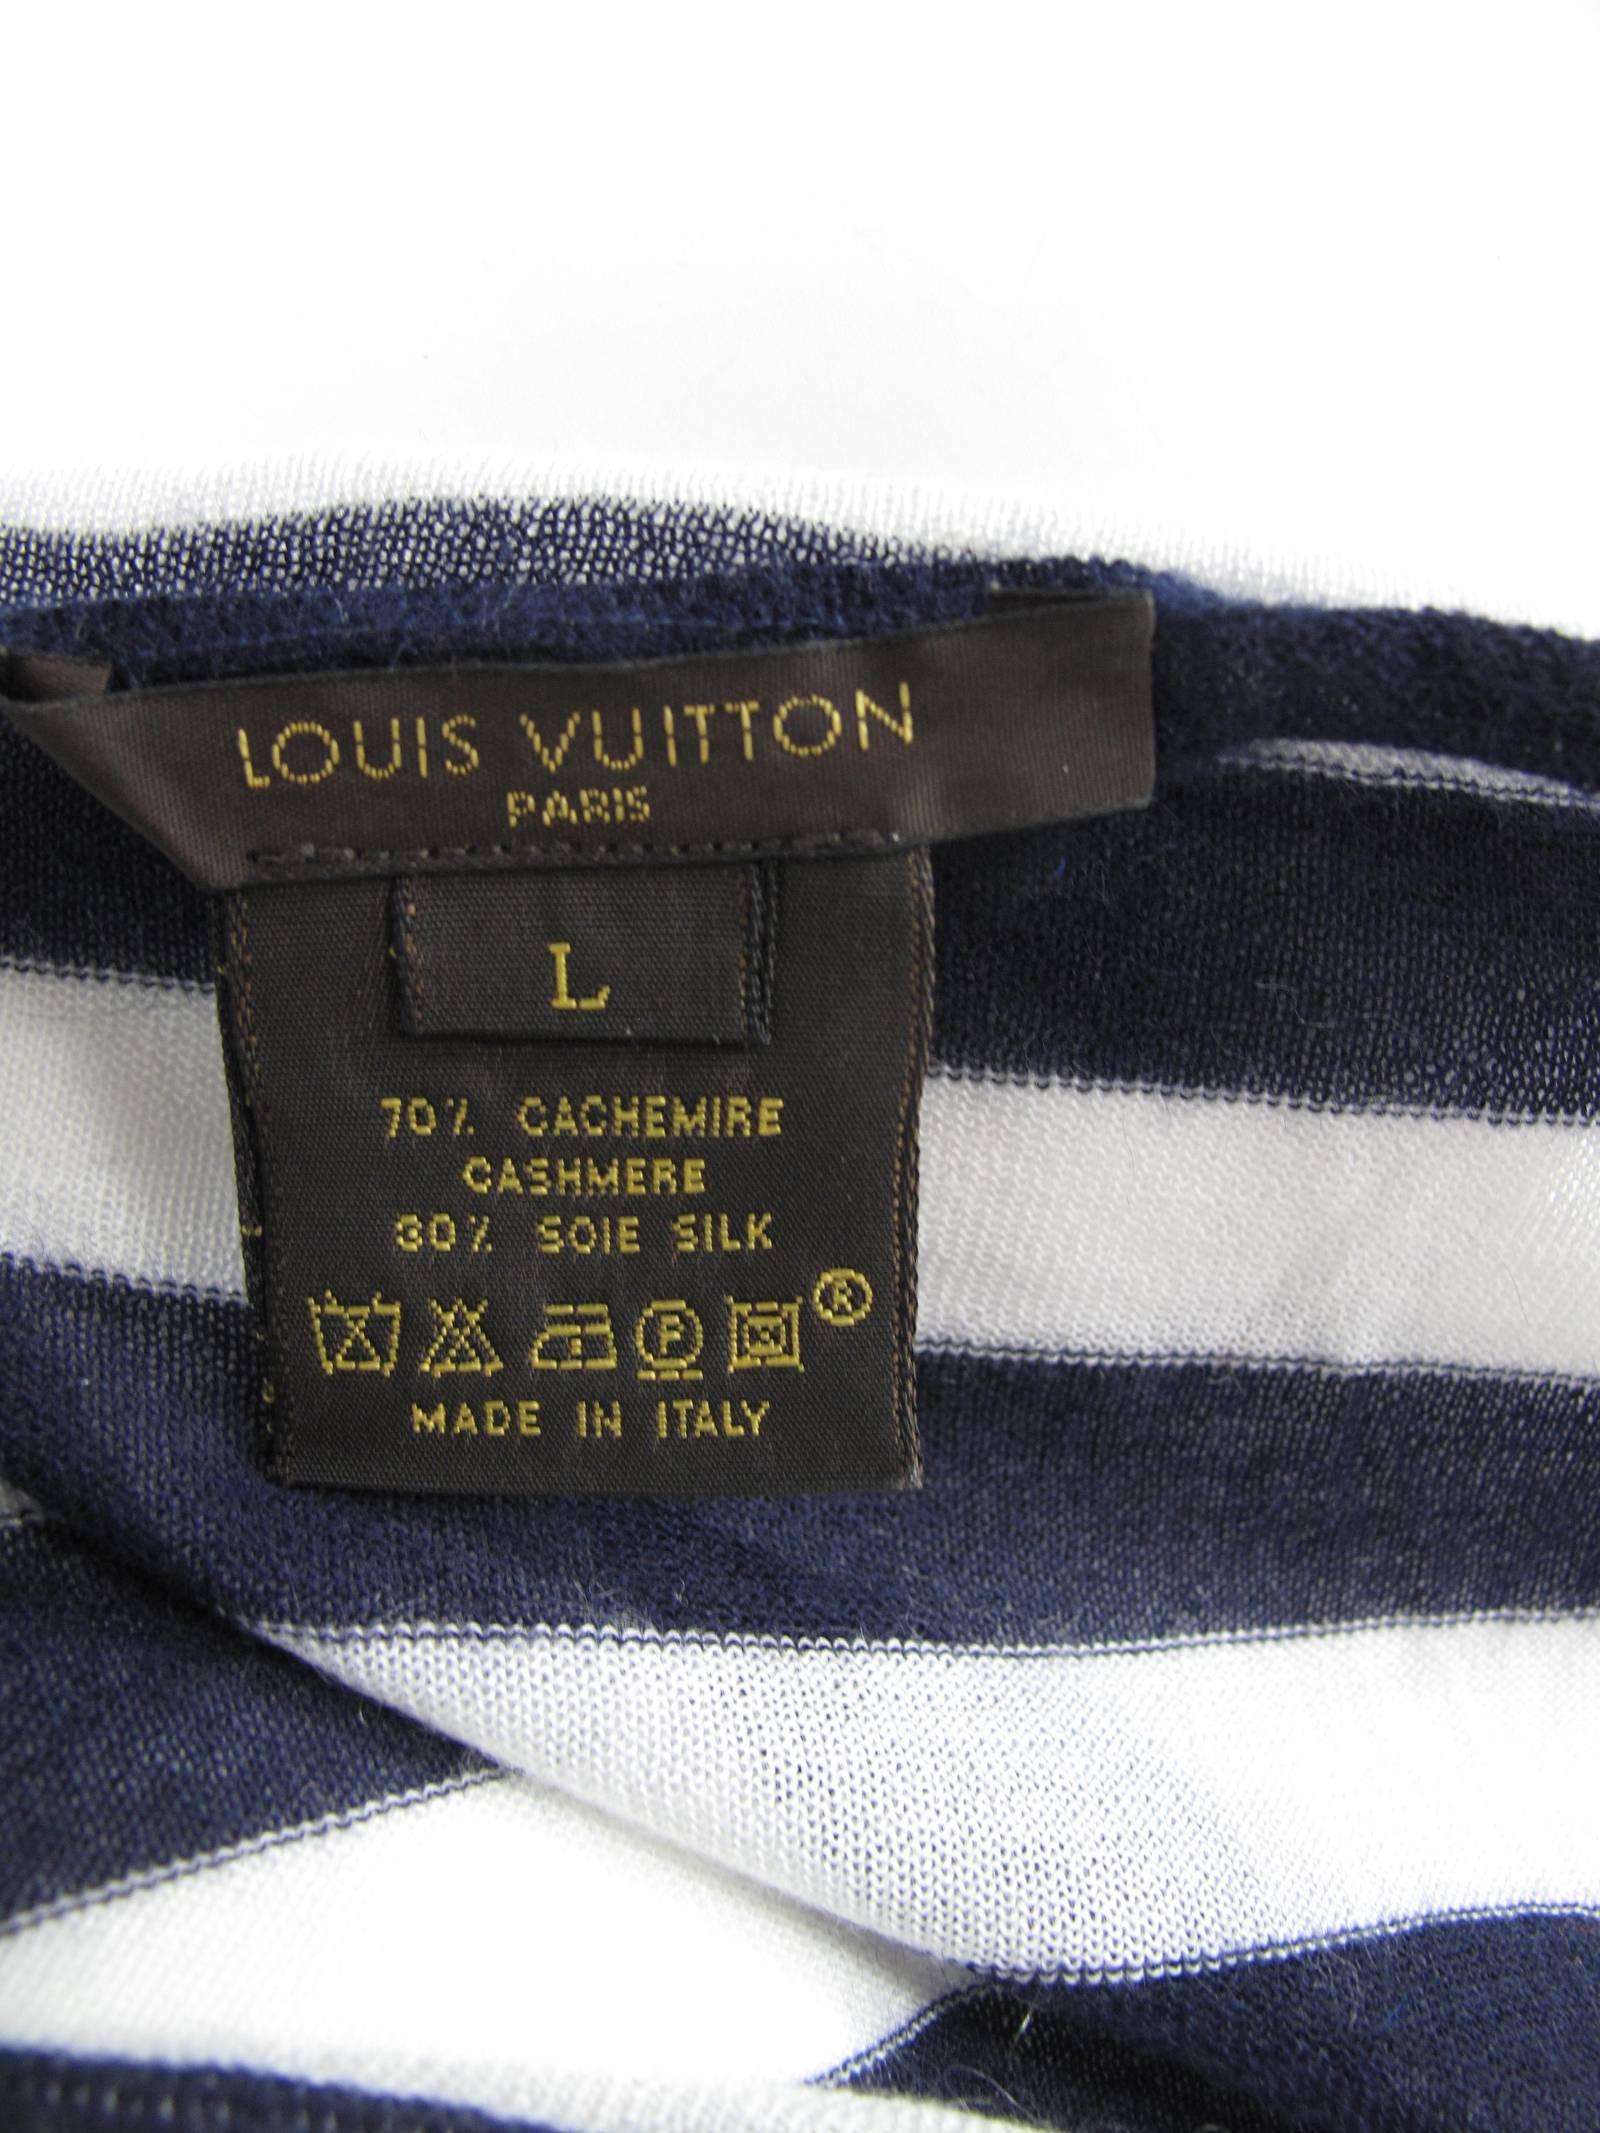 Women's Louis Vuitton Tissue Cashmere Dress